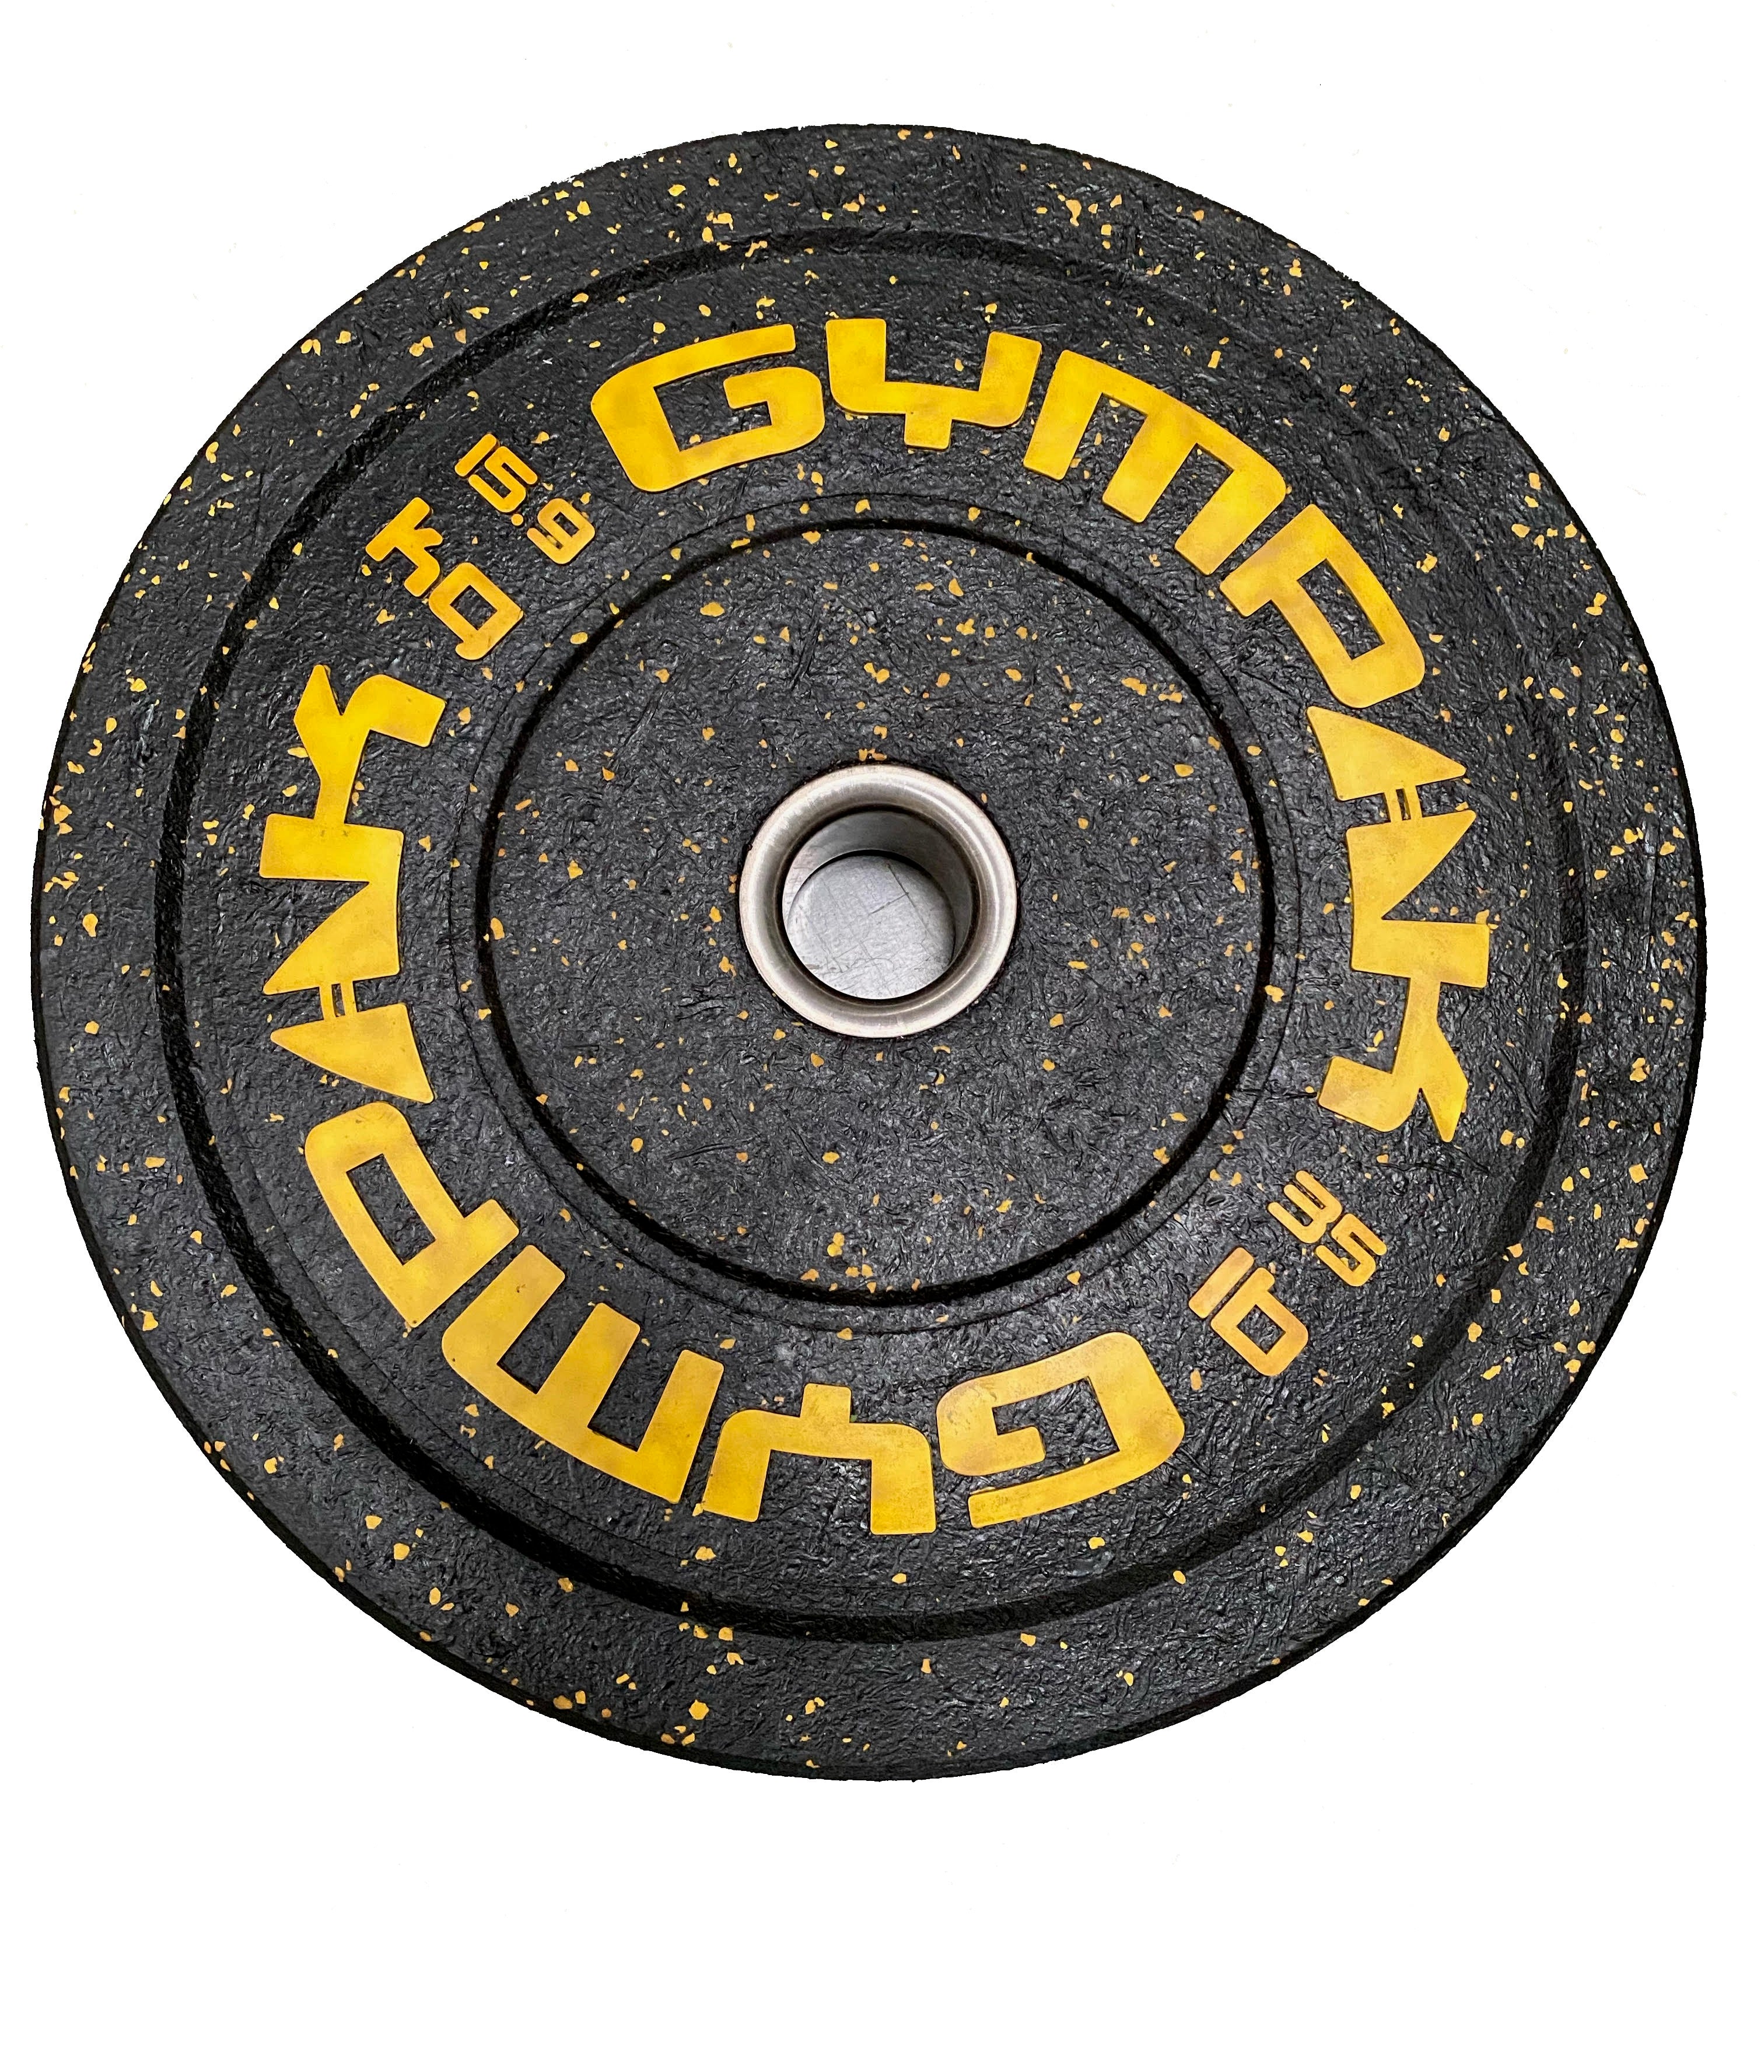 Crumb Bumper Olympic Plate - Yellow - 35 lb